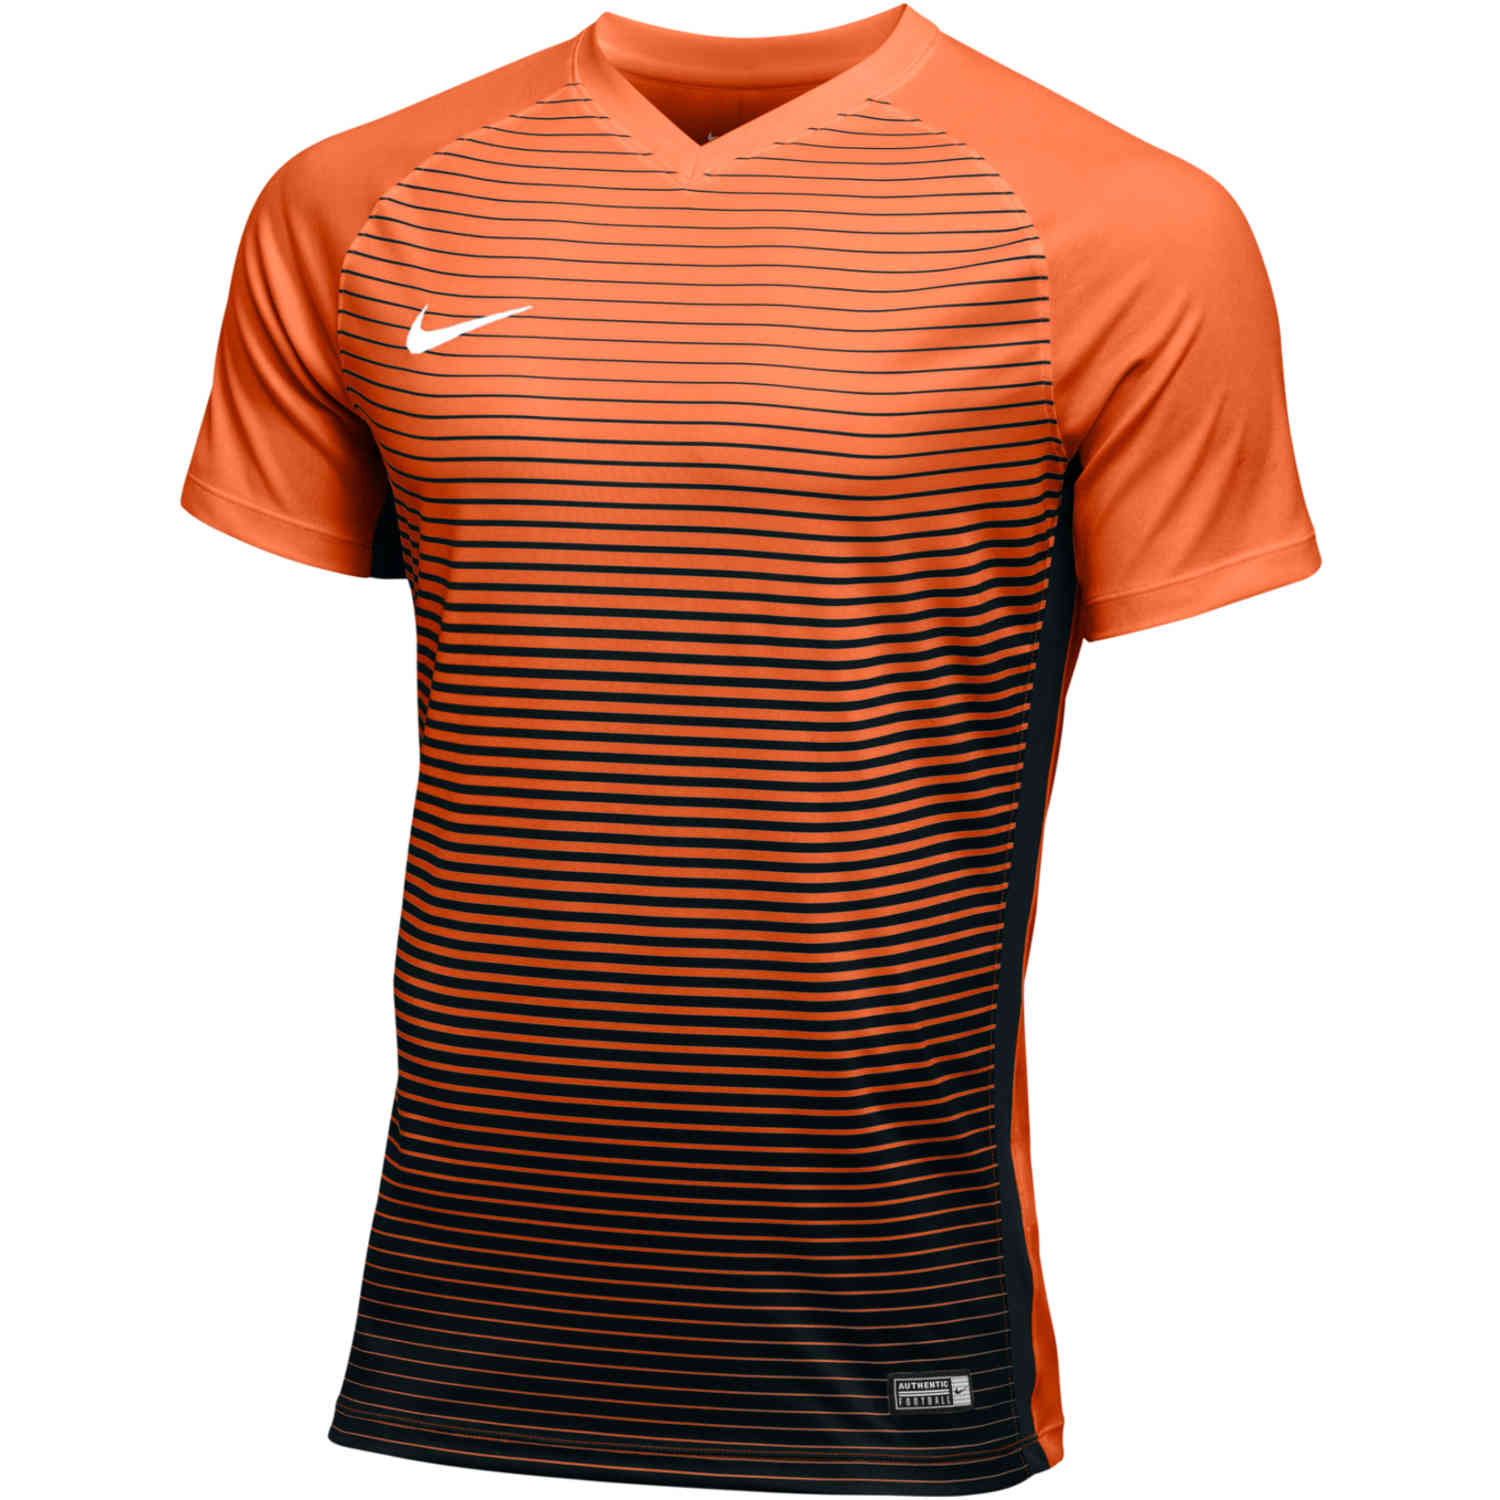 Nike Precision IV Jersey - Orange/Black - SoccerPro